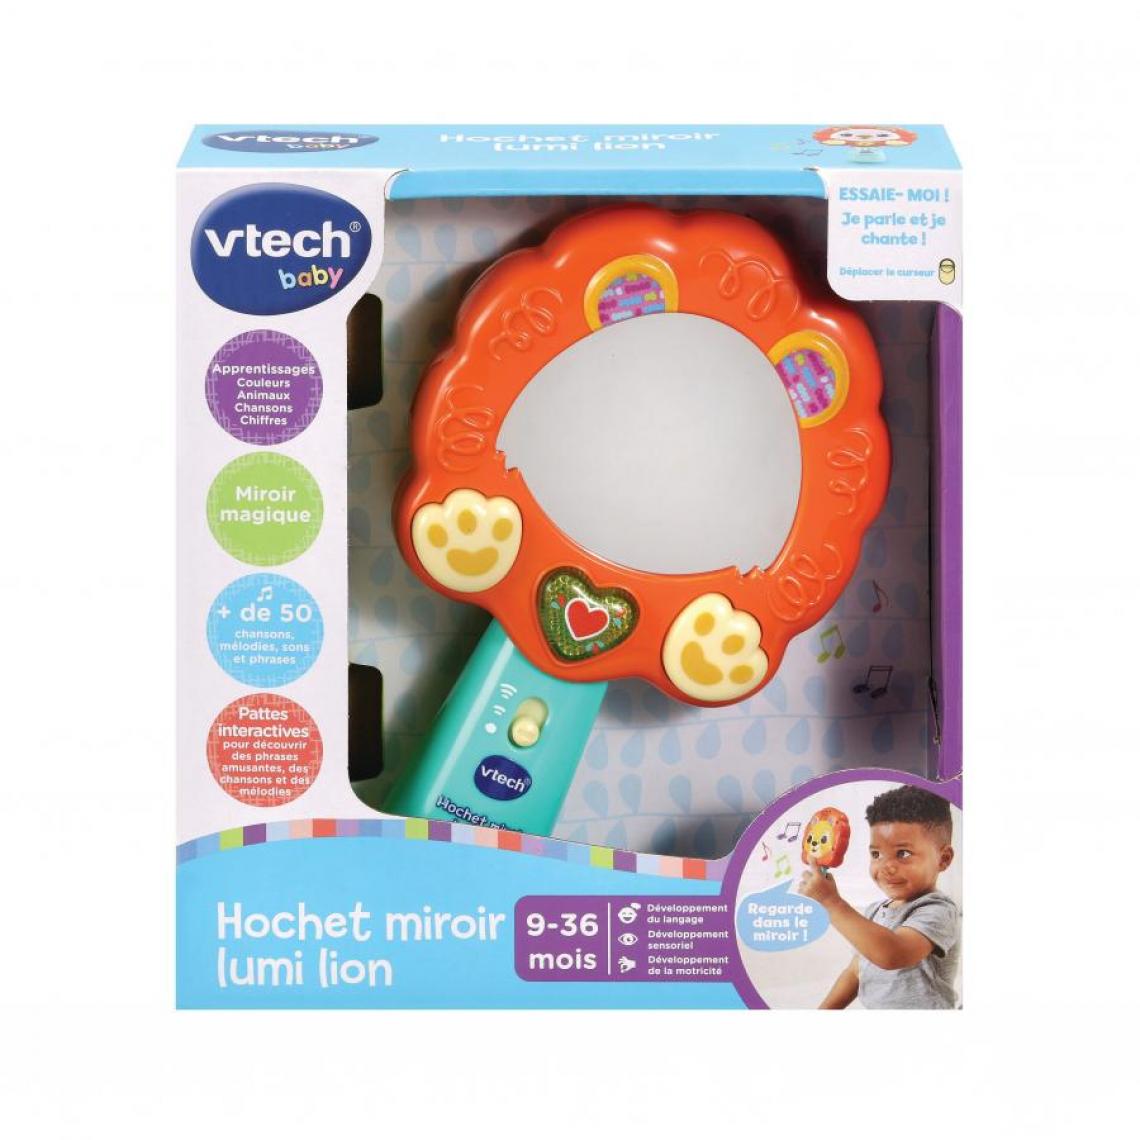 Vtech - Hochet musical miroir lumi lion - Accessoire enfant